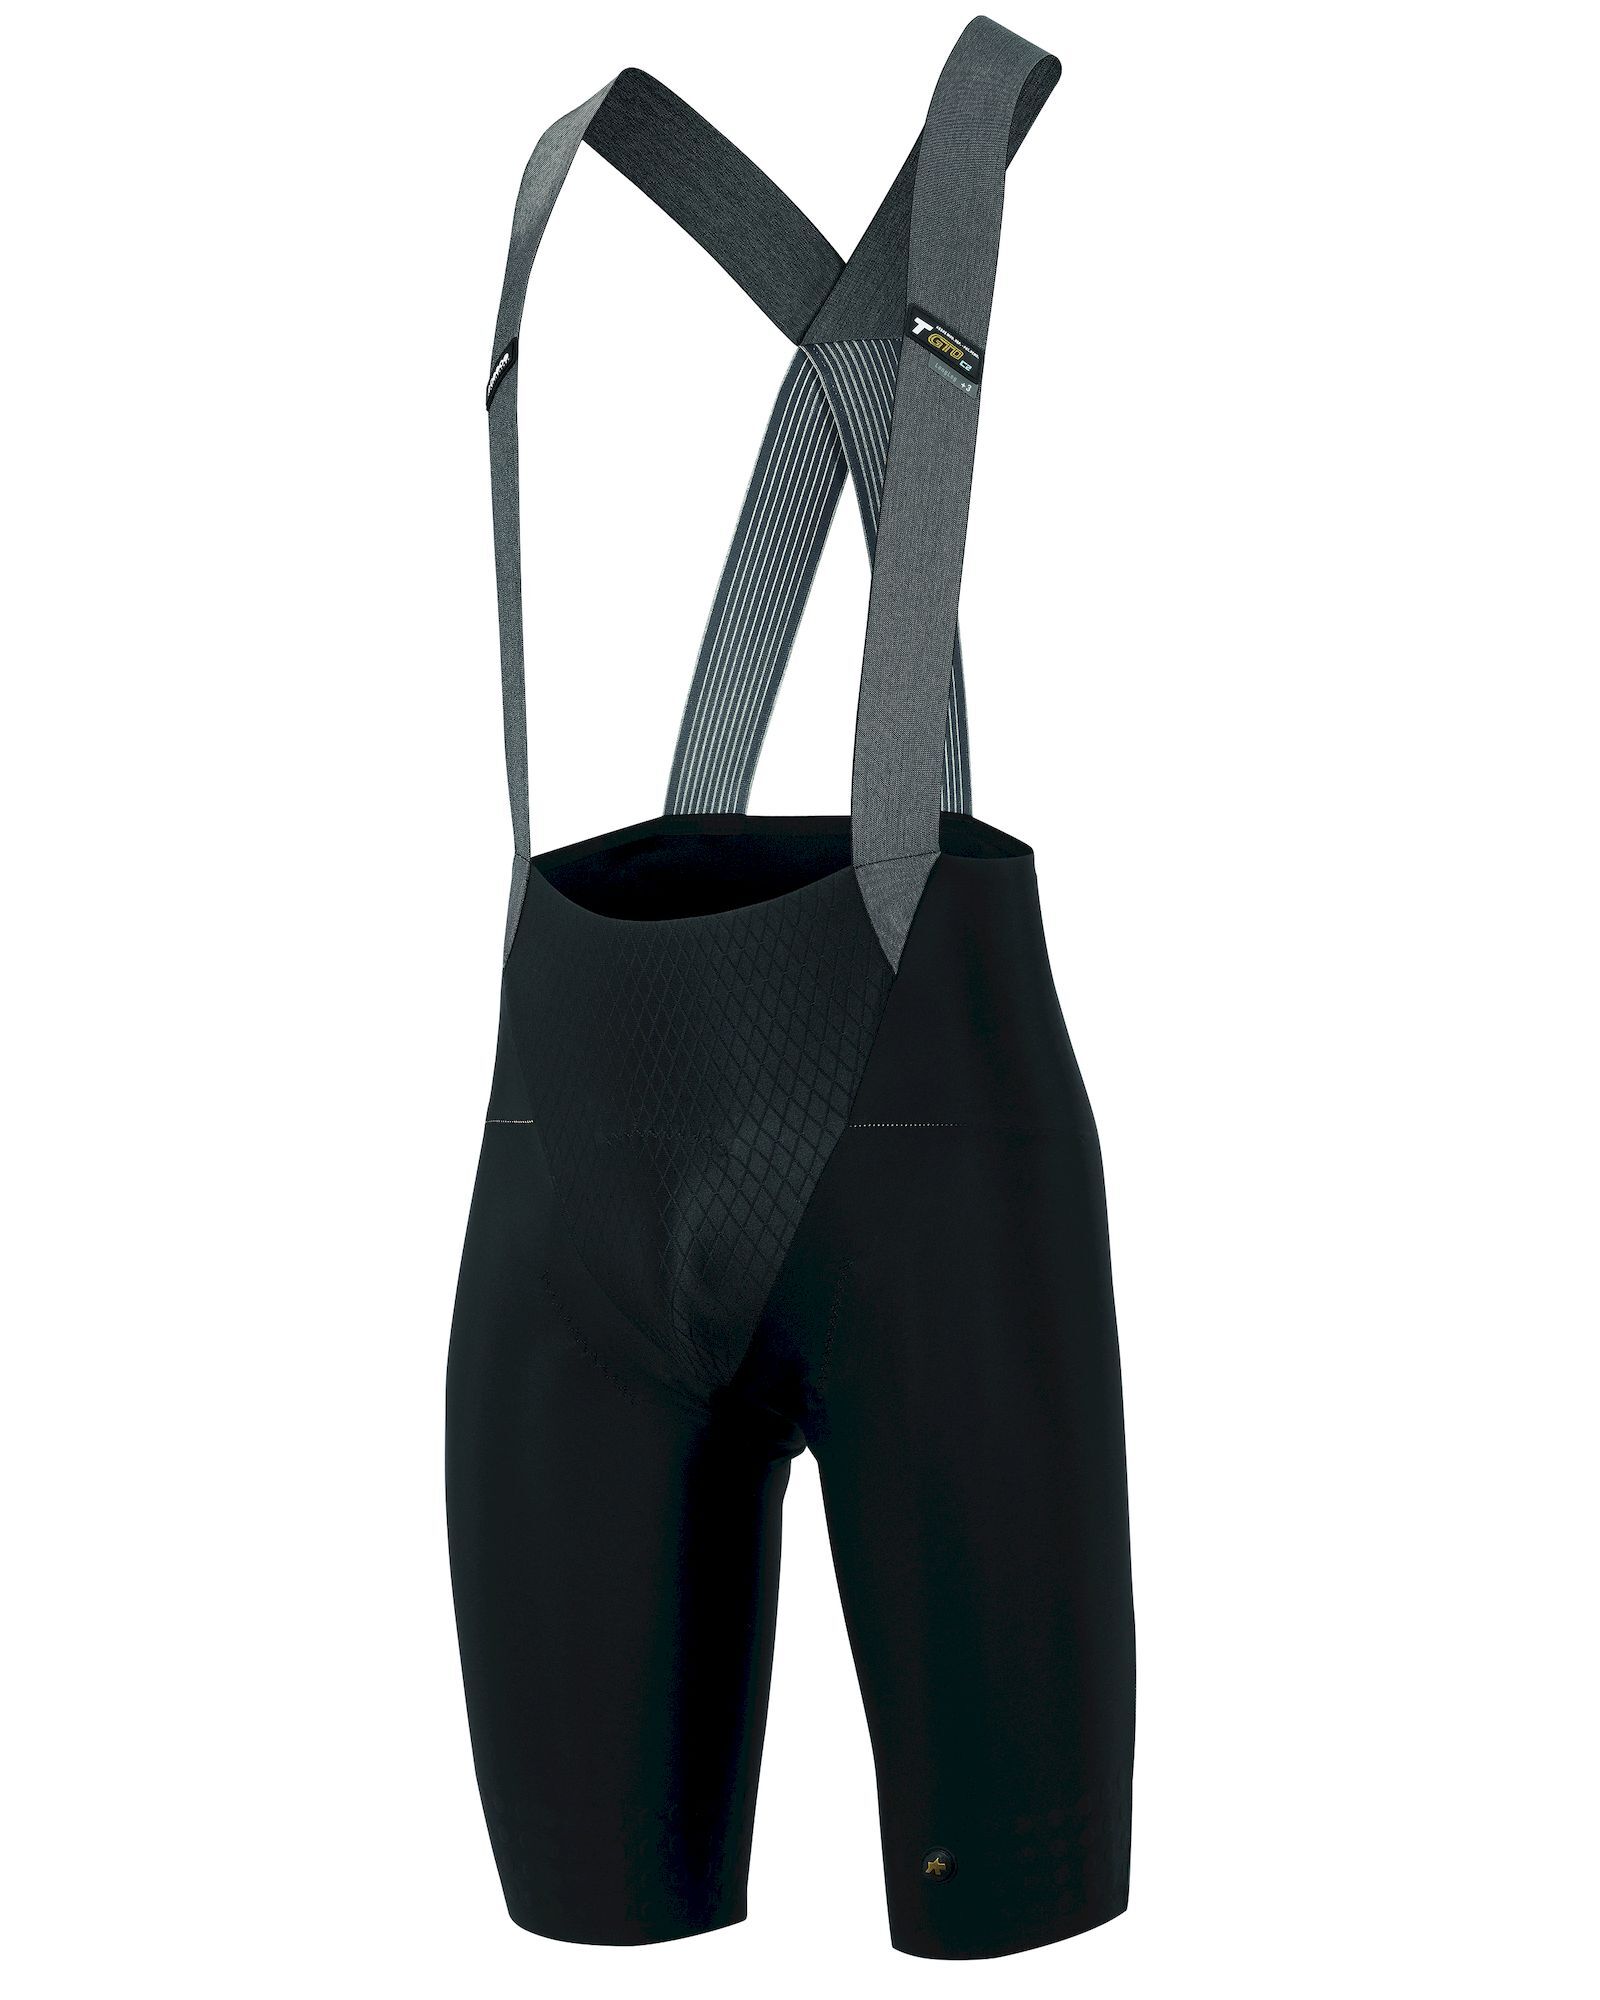 Assos Mille GTO Bib Shorts C2 long - Cycling shorts - Men's | Hardloop